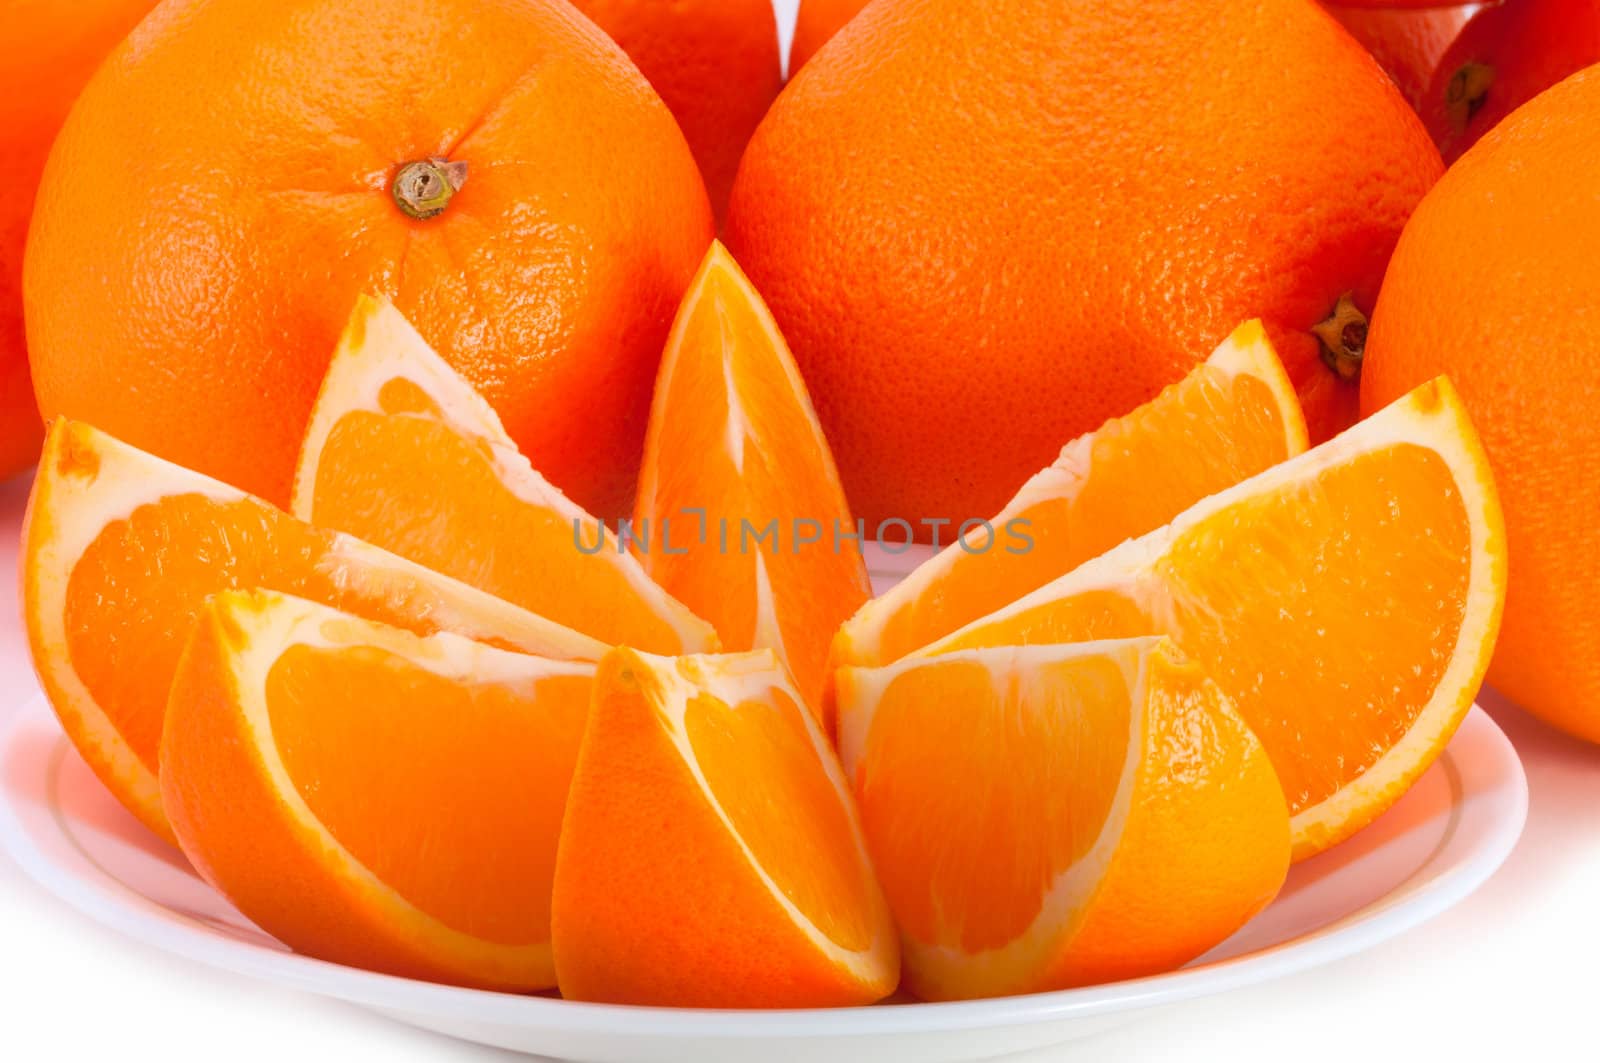 Vivid fresh oranges on the table. by lobzik